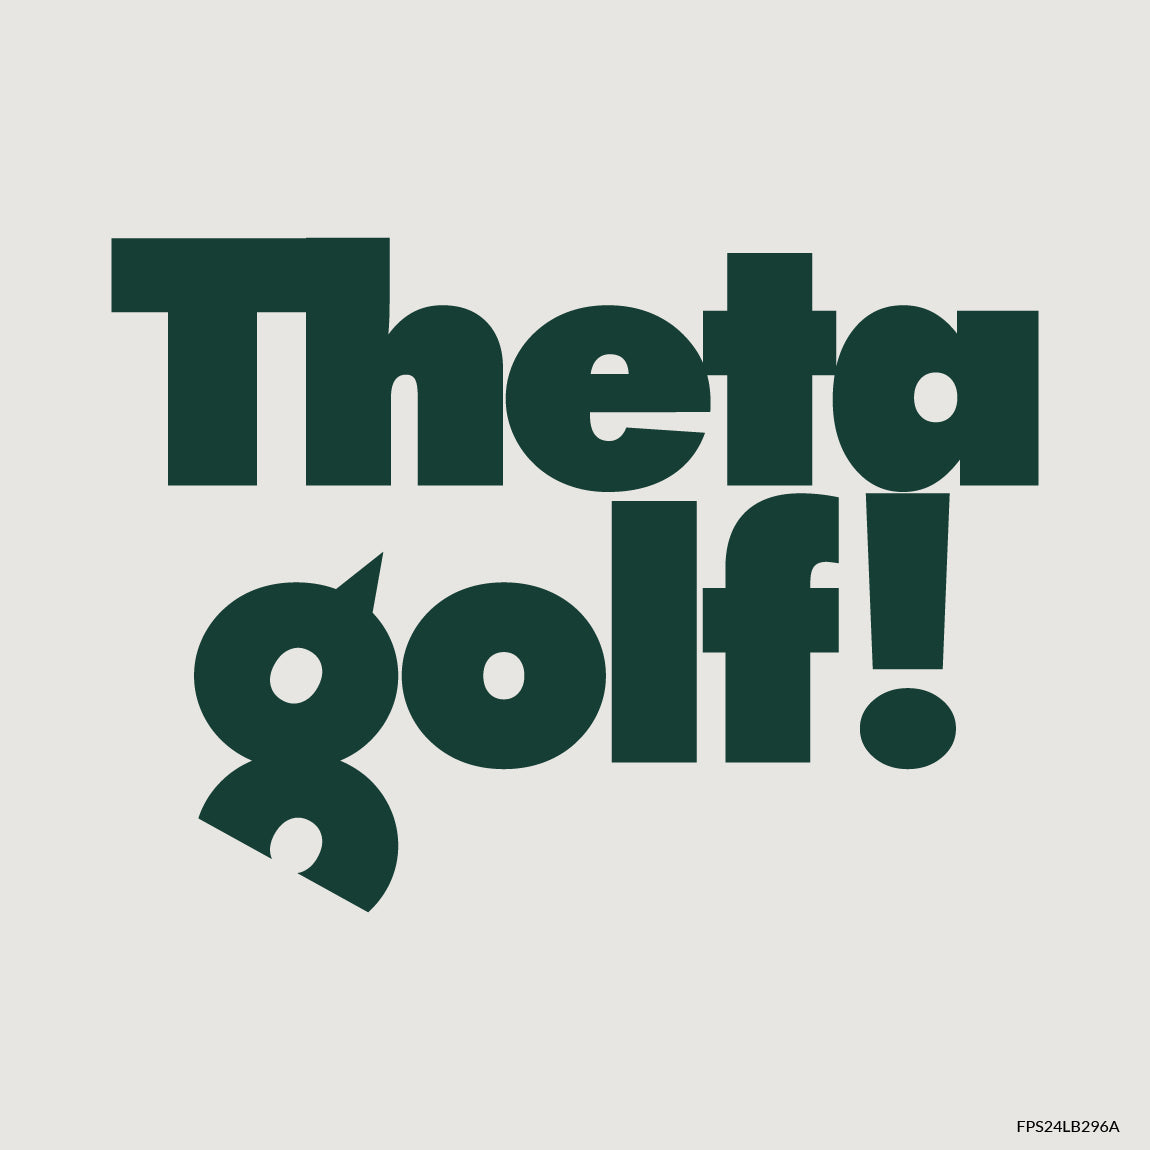 Theta's Golf